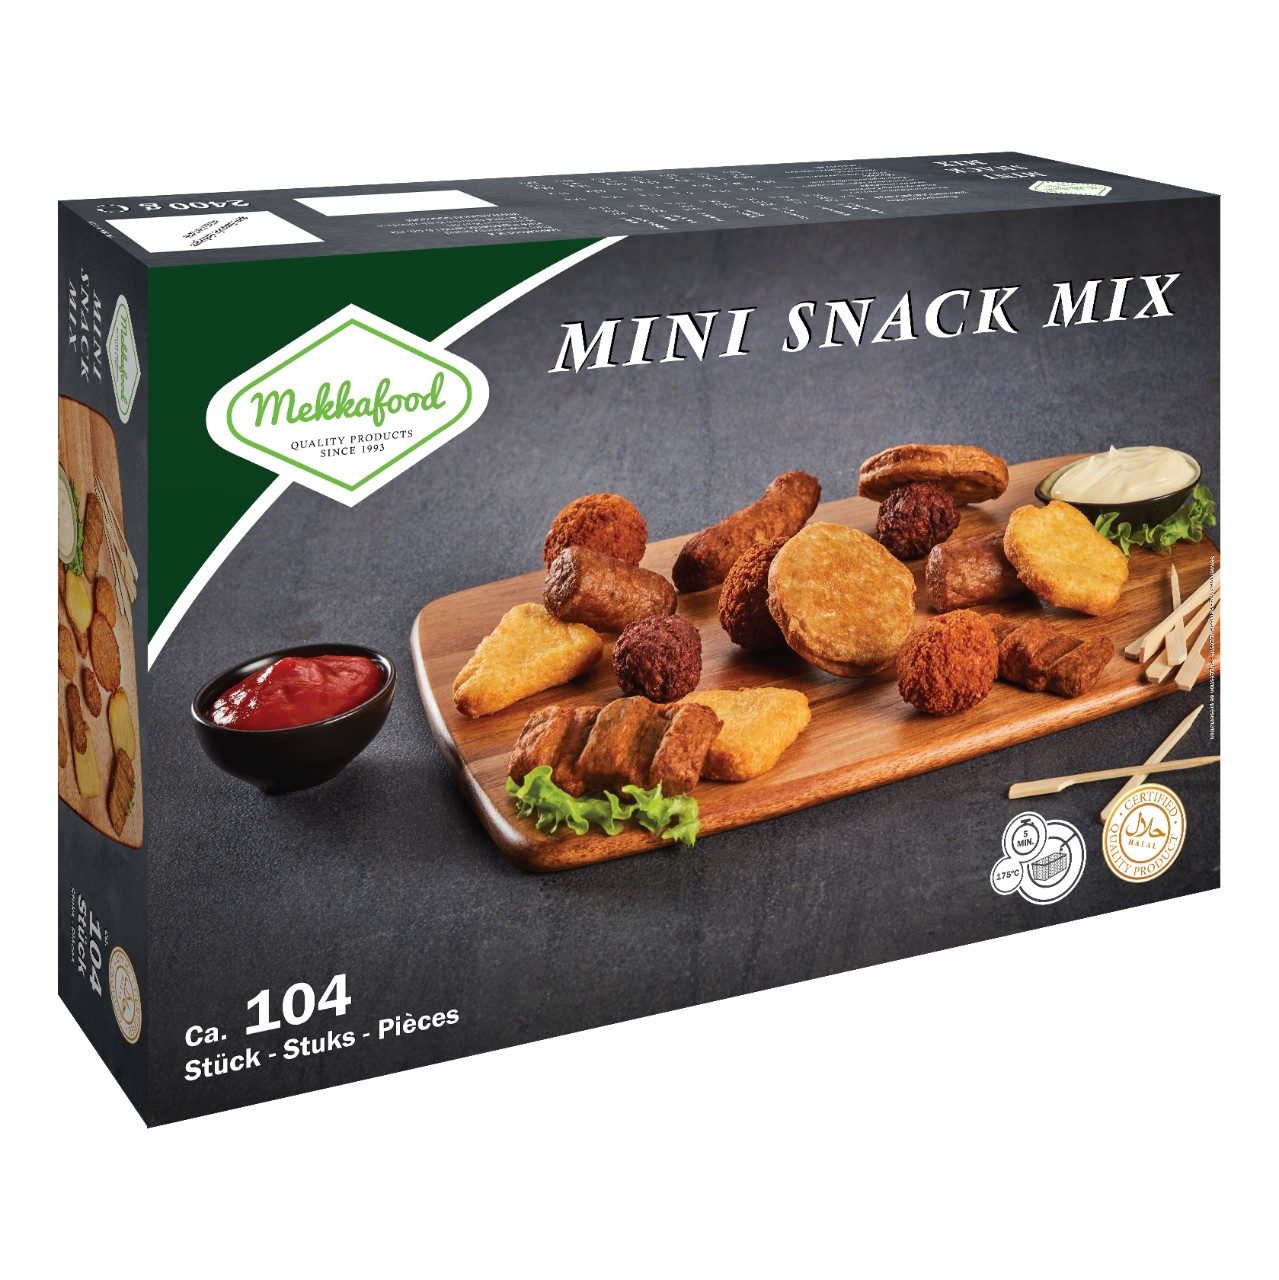 Mini snack mix